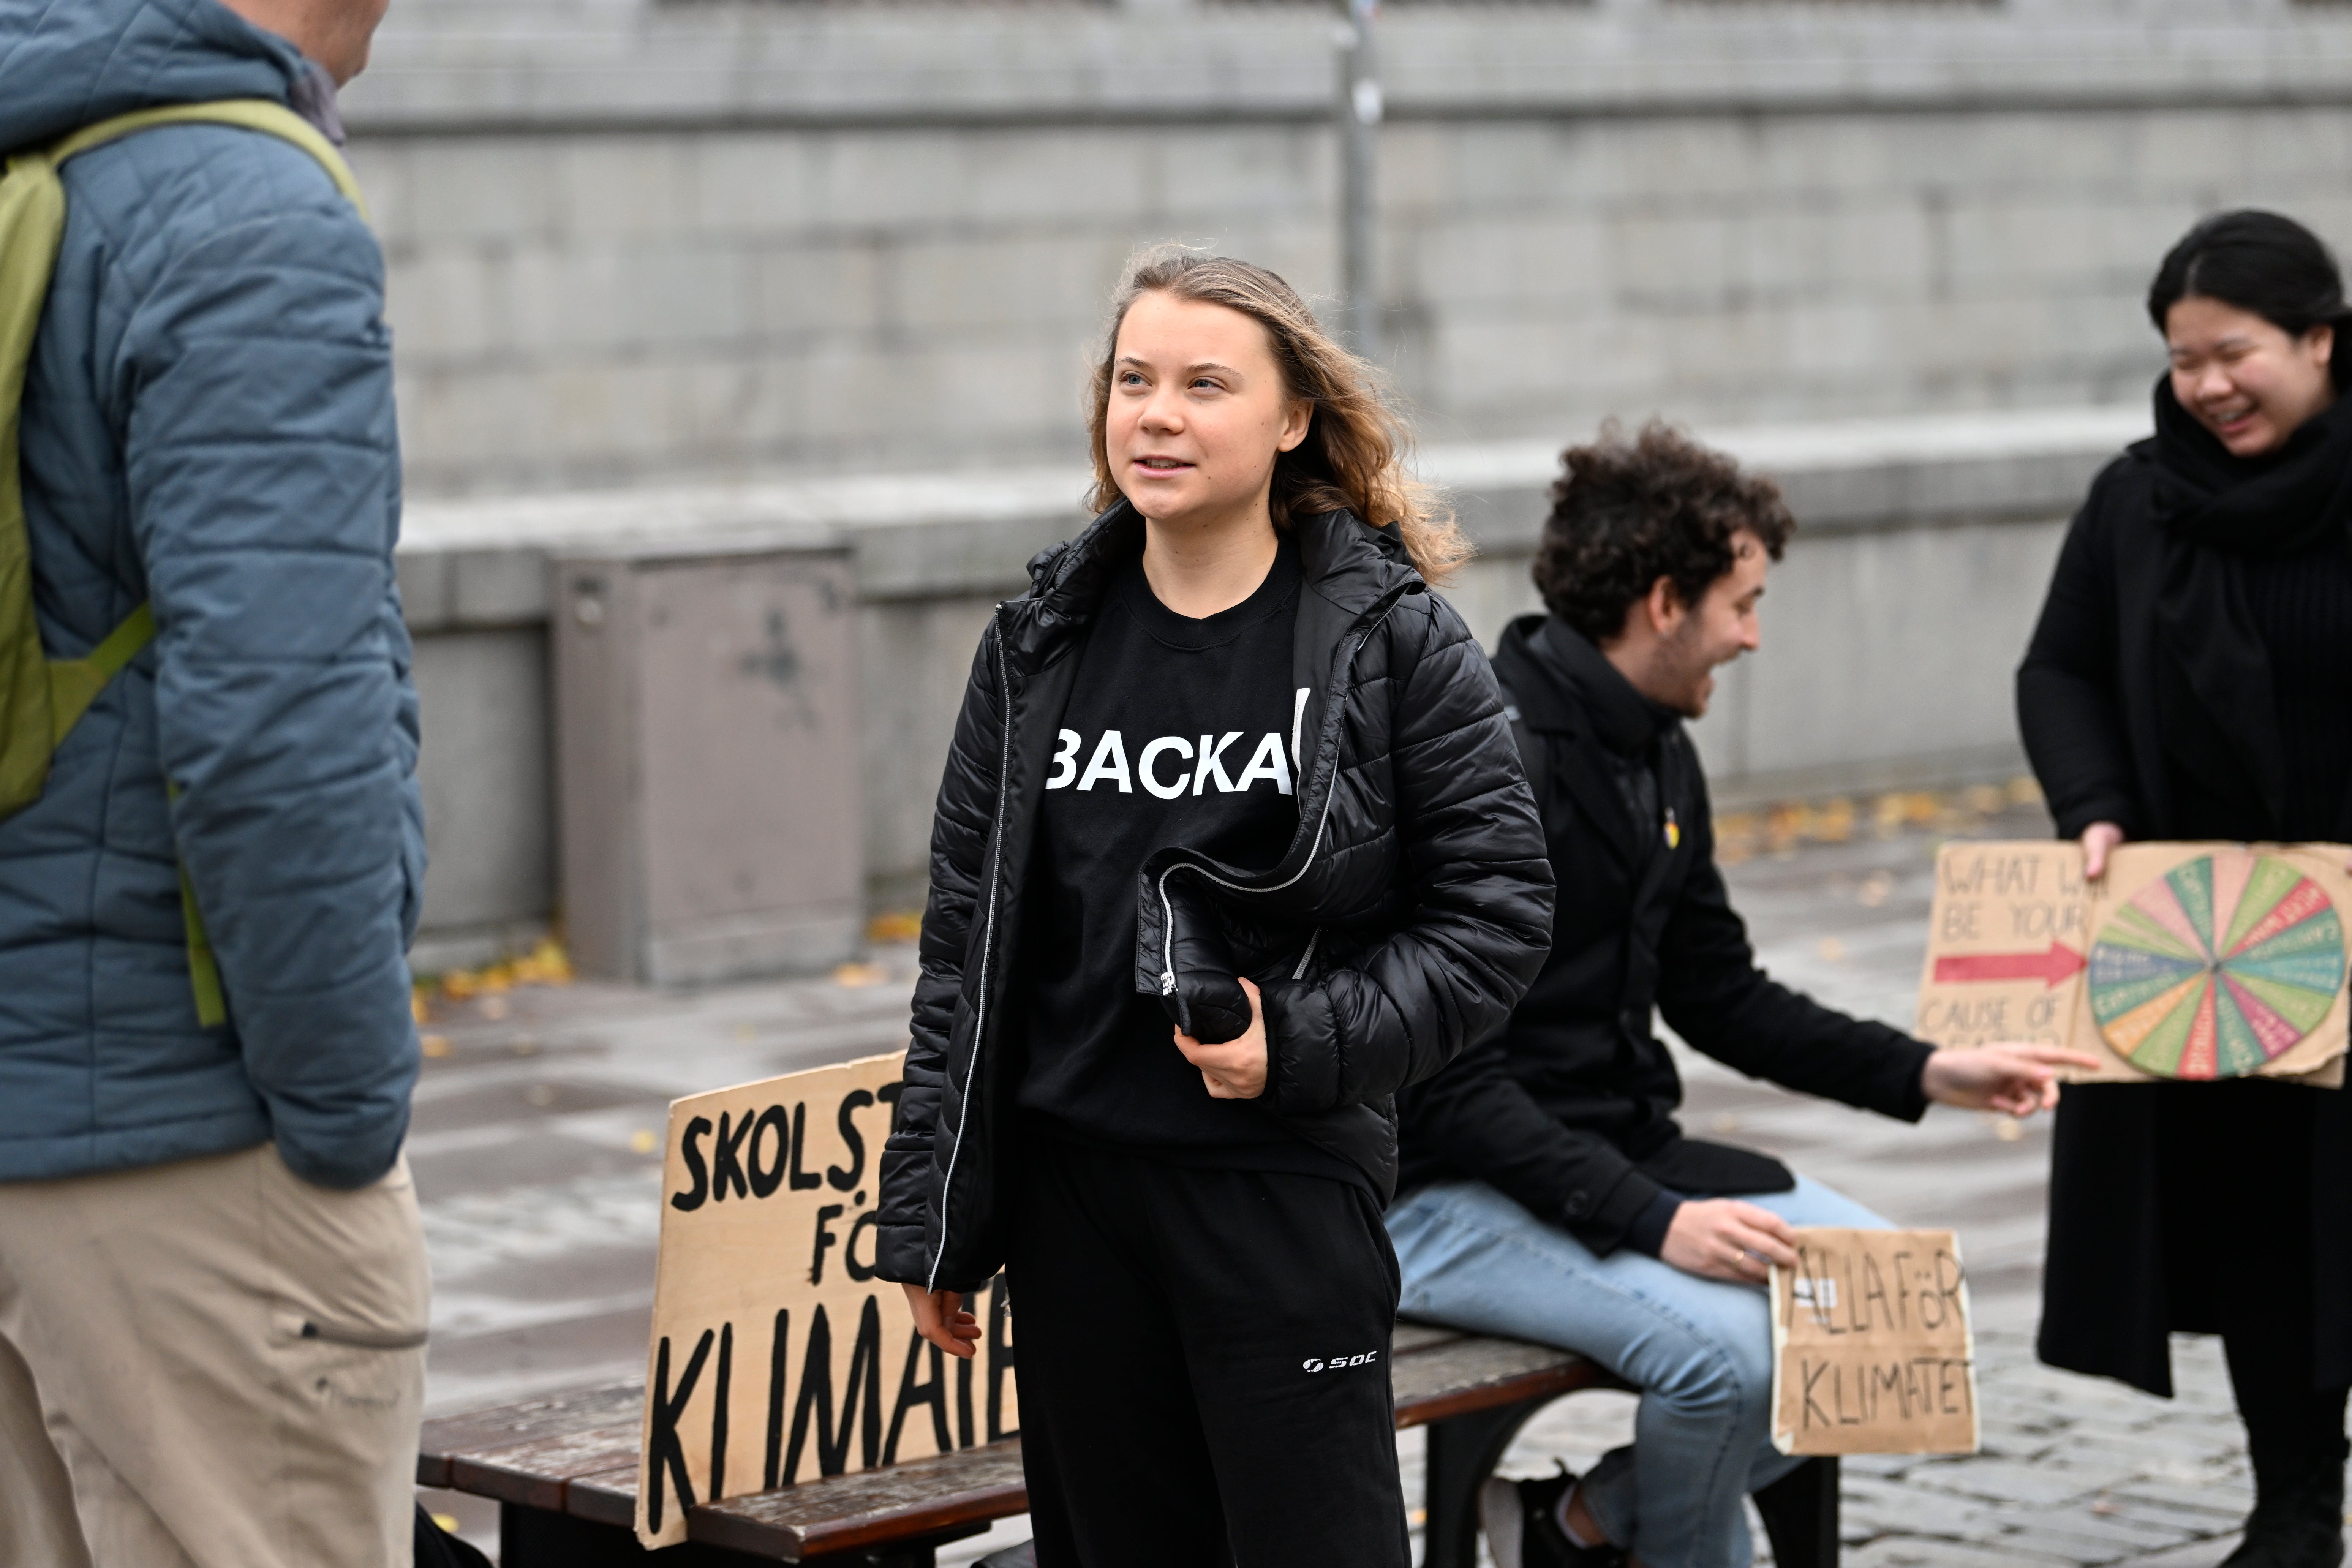 Climate activist Greta Thunberg won't be school striking after